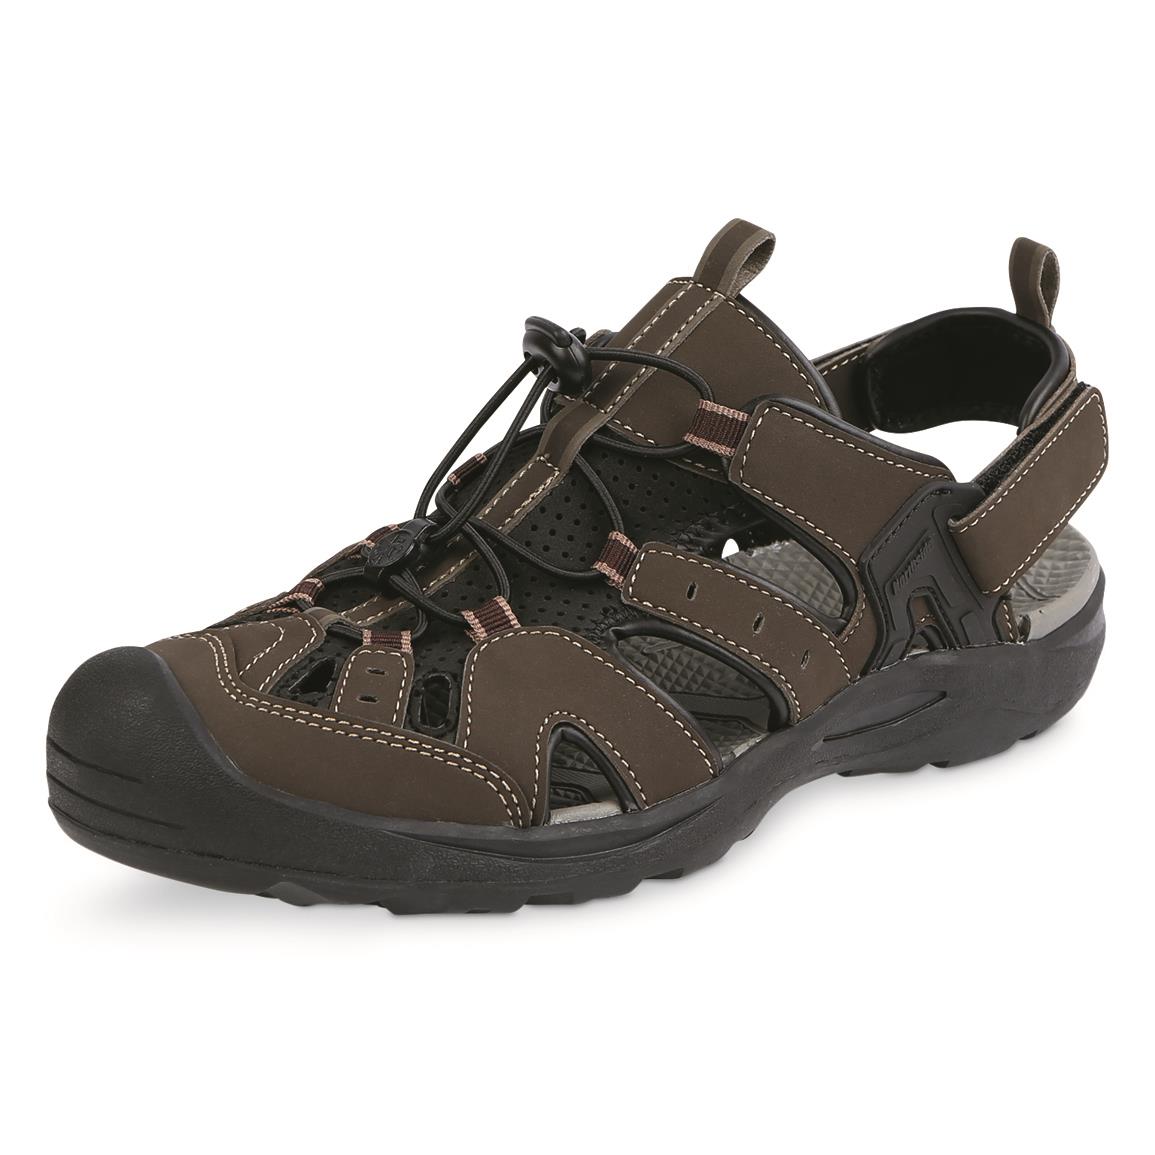 Northside Men's Burke 3.0 Sandals, Dark Brown